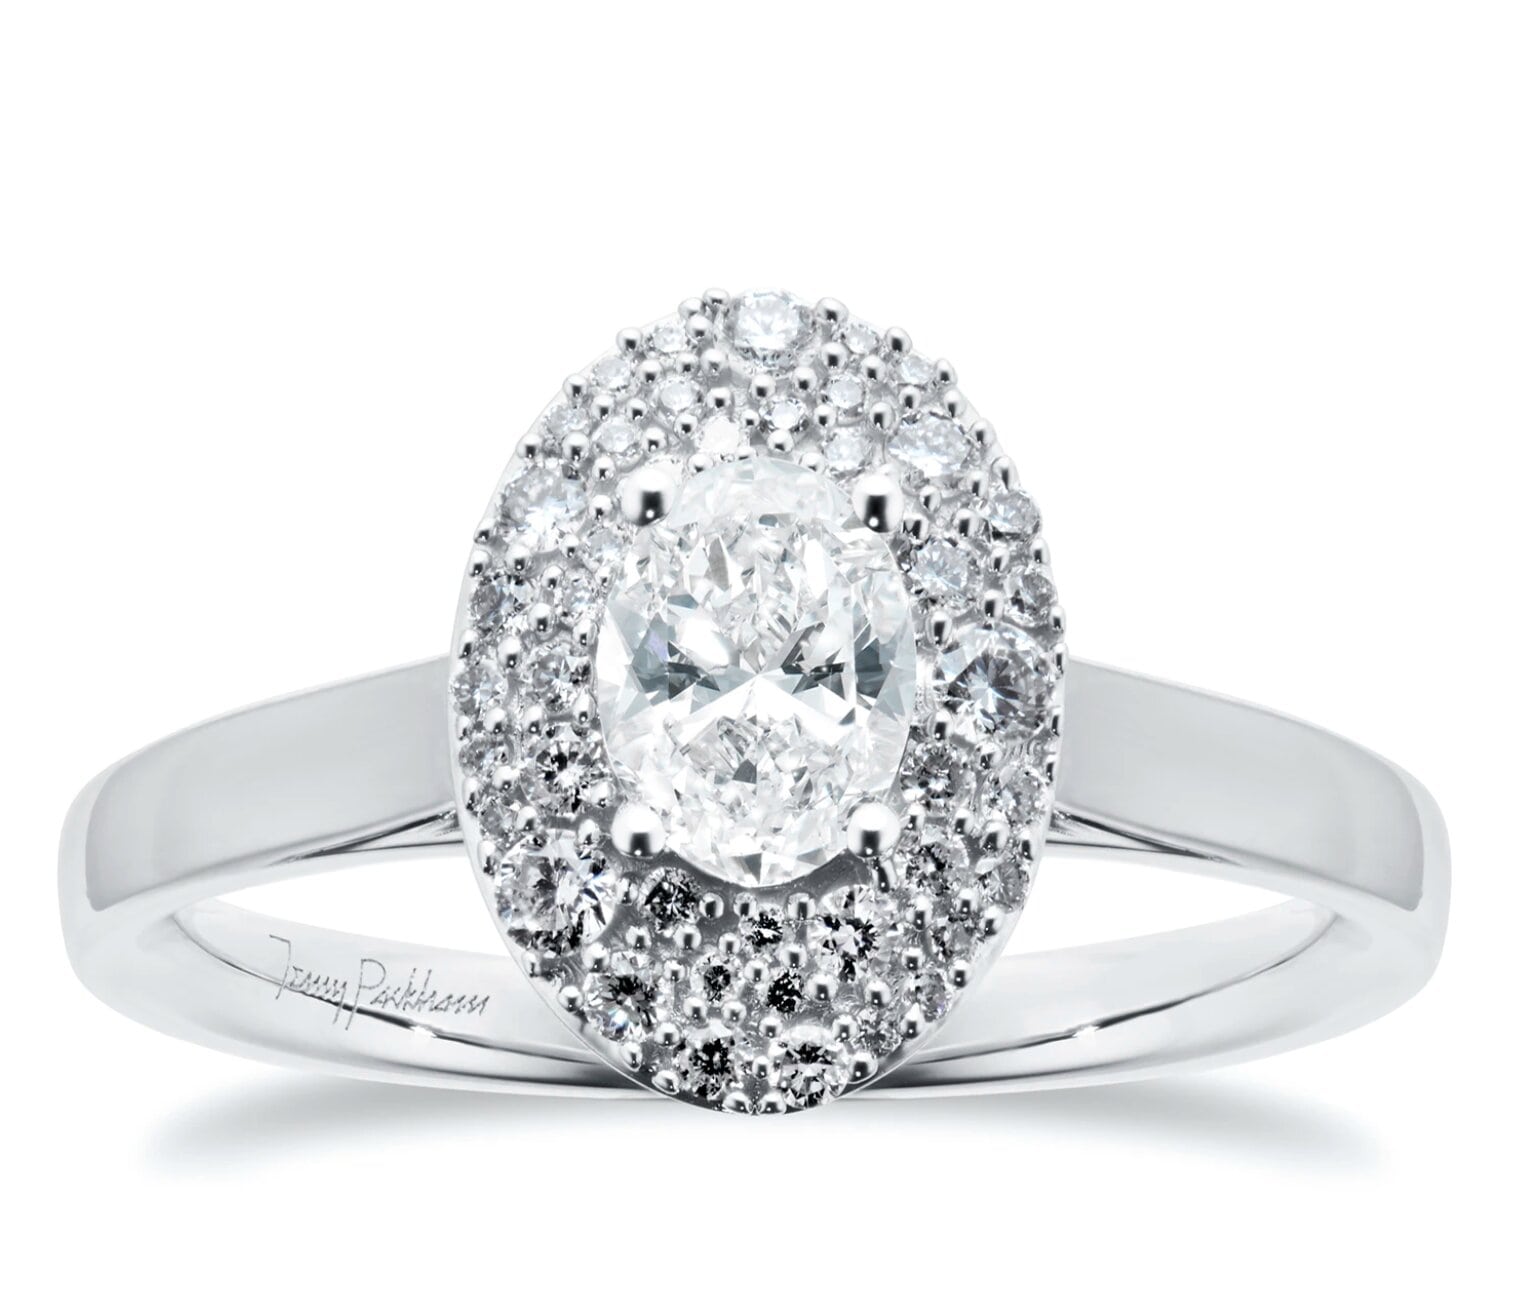 Sold at Auction: JENNY PACKHAM PLATINUM VS1 DIAMOND LADIES RING